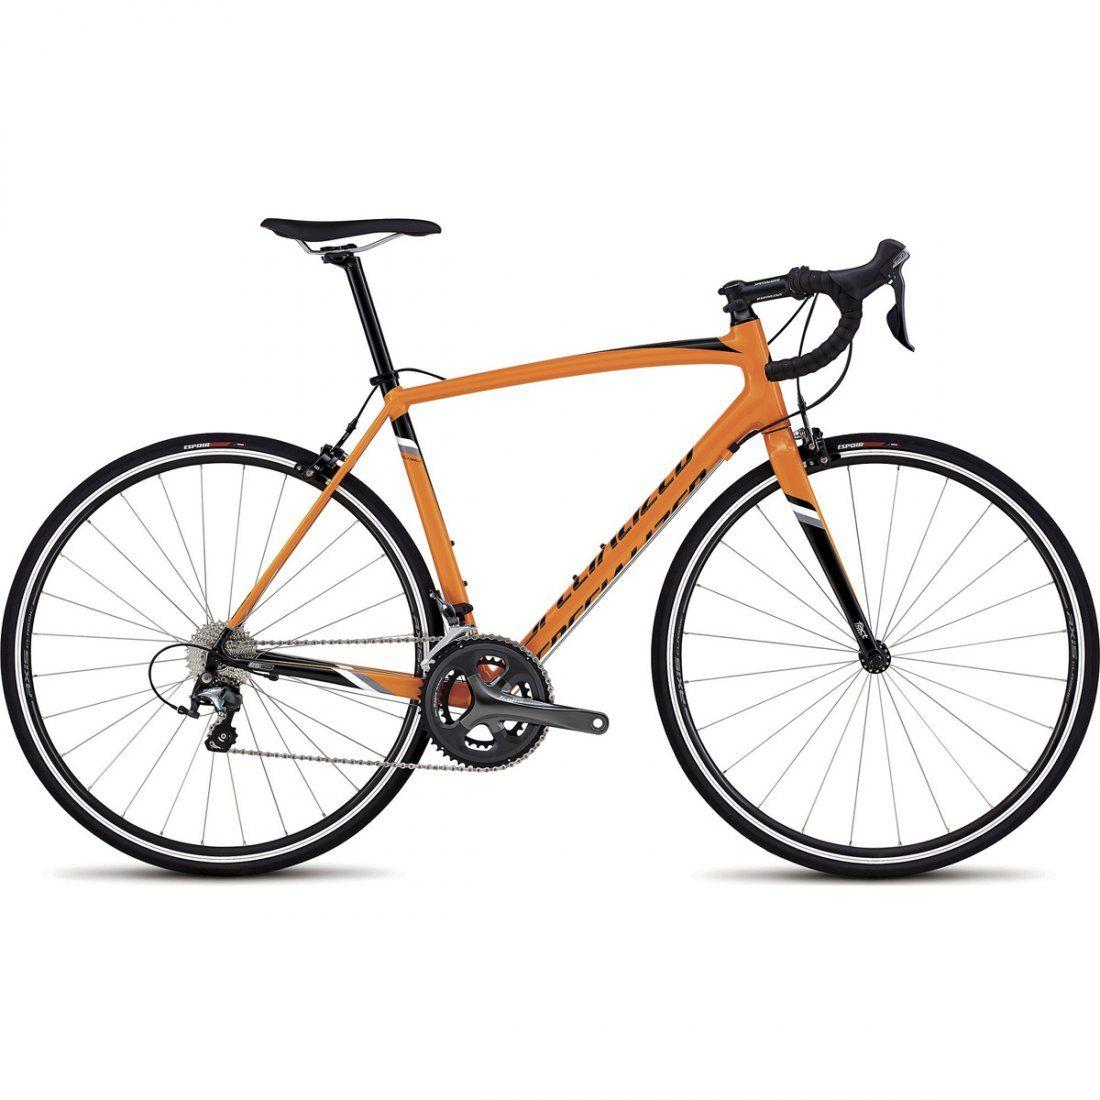 Orange and White Road Logo - SPECIALIZED Allez DSW Elite 2016 Orange / Black / White Road bike ...